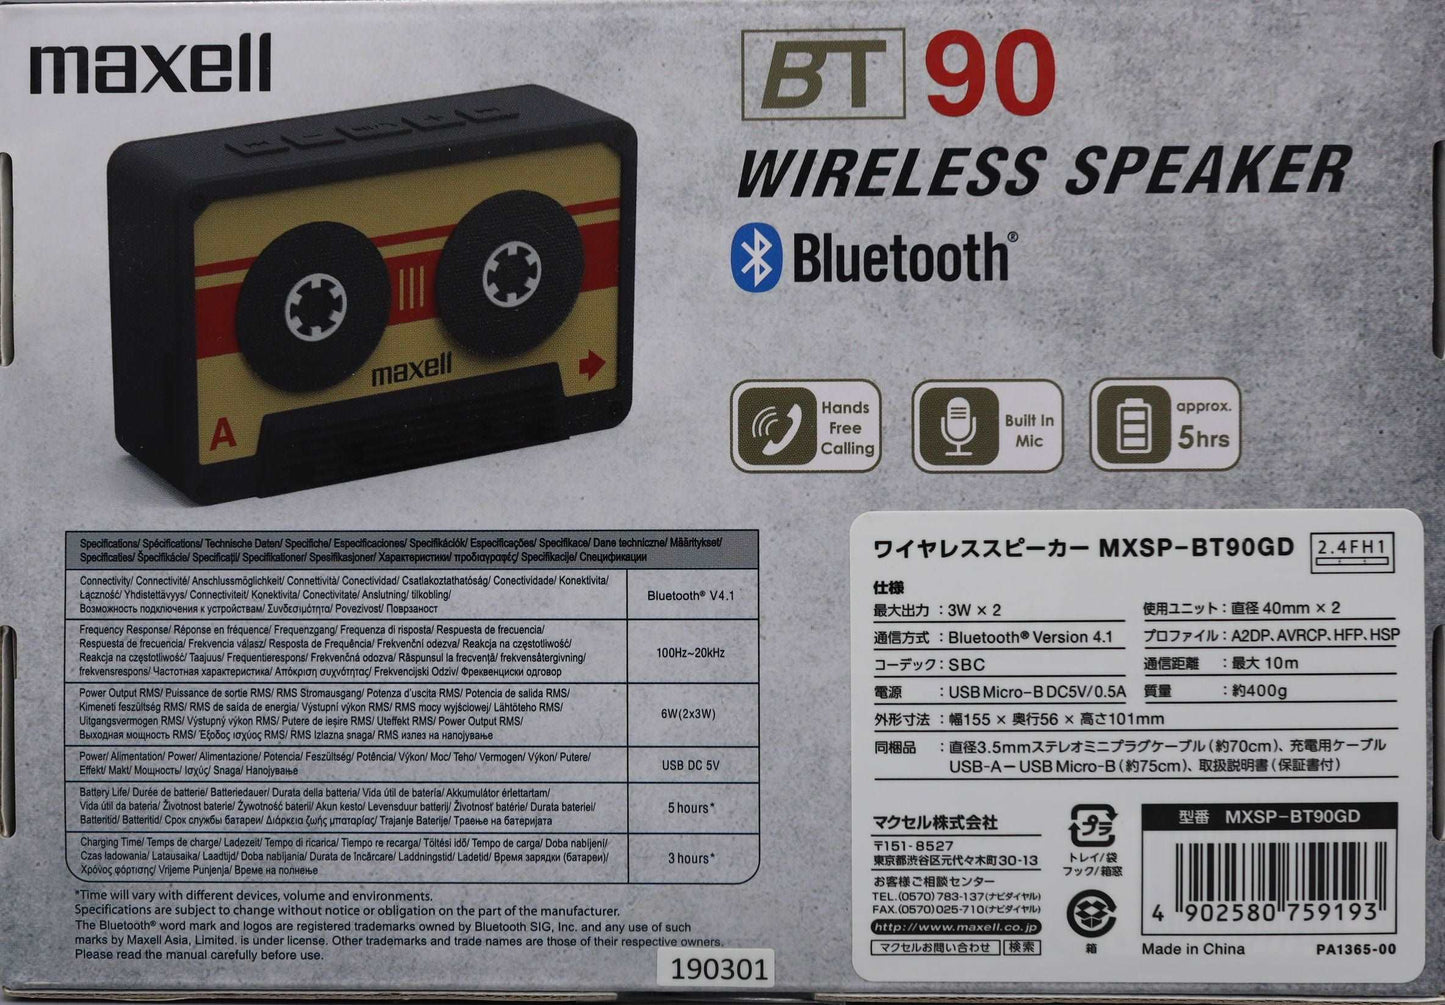 Maxell BT 90 Bluetooth Speaker